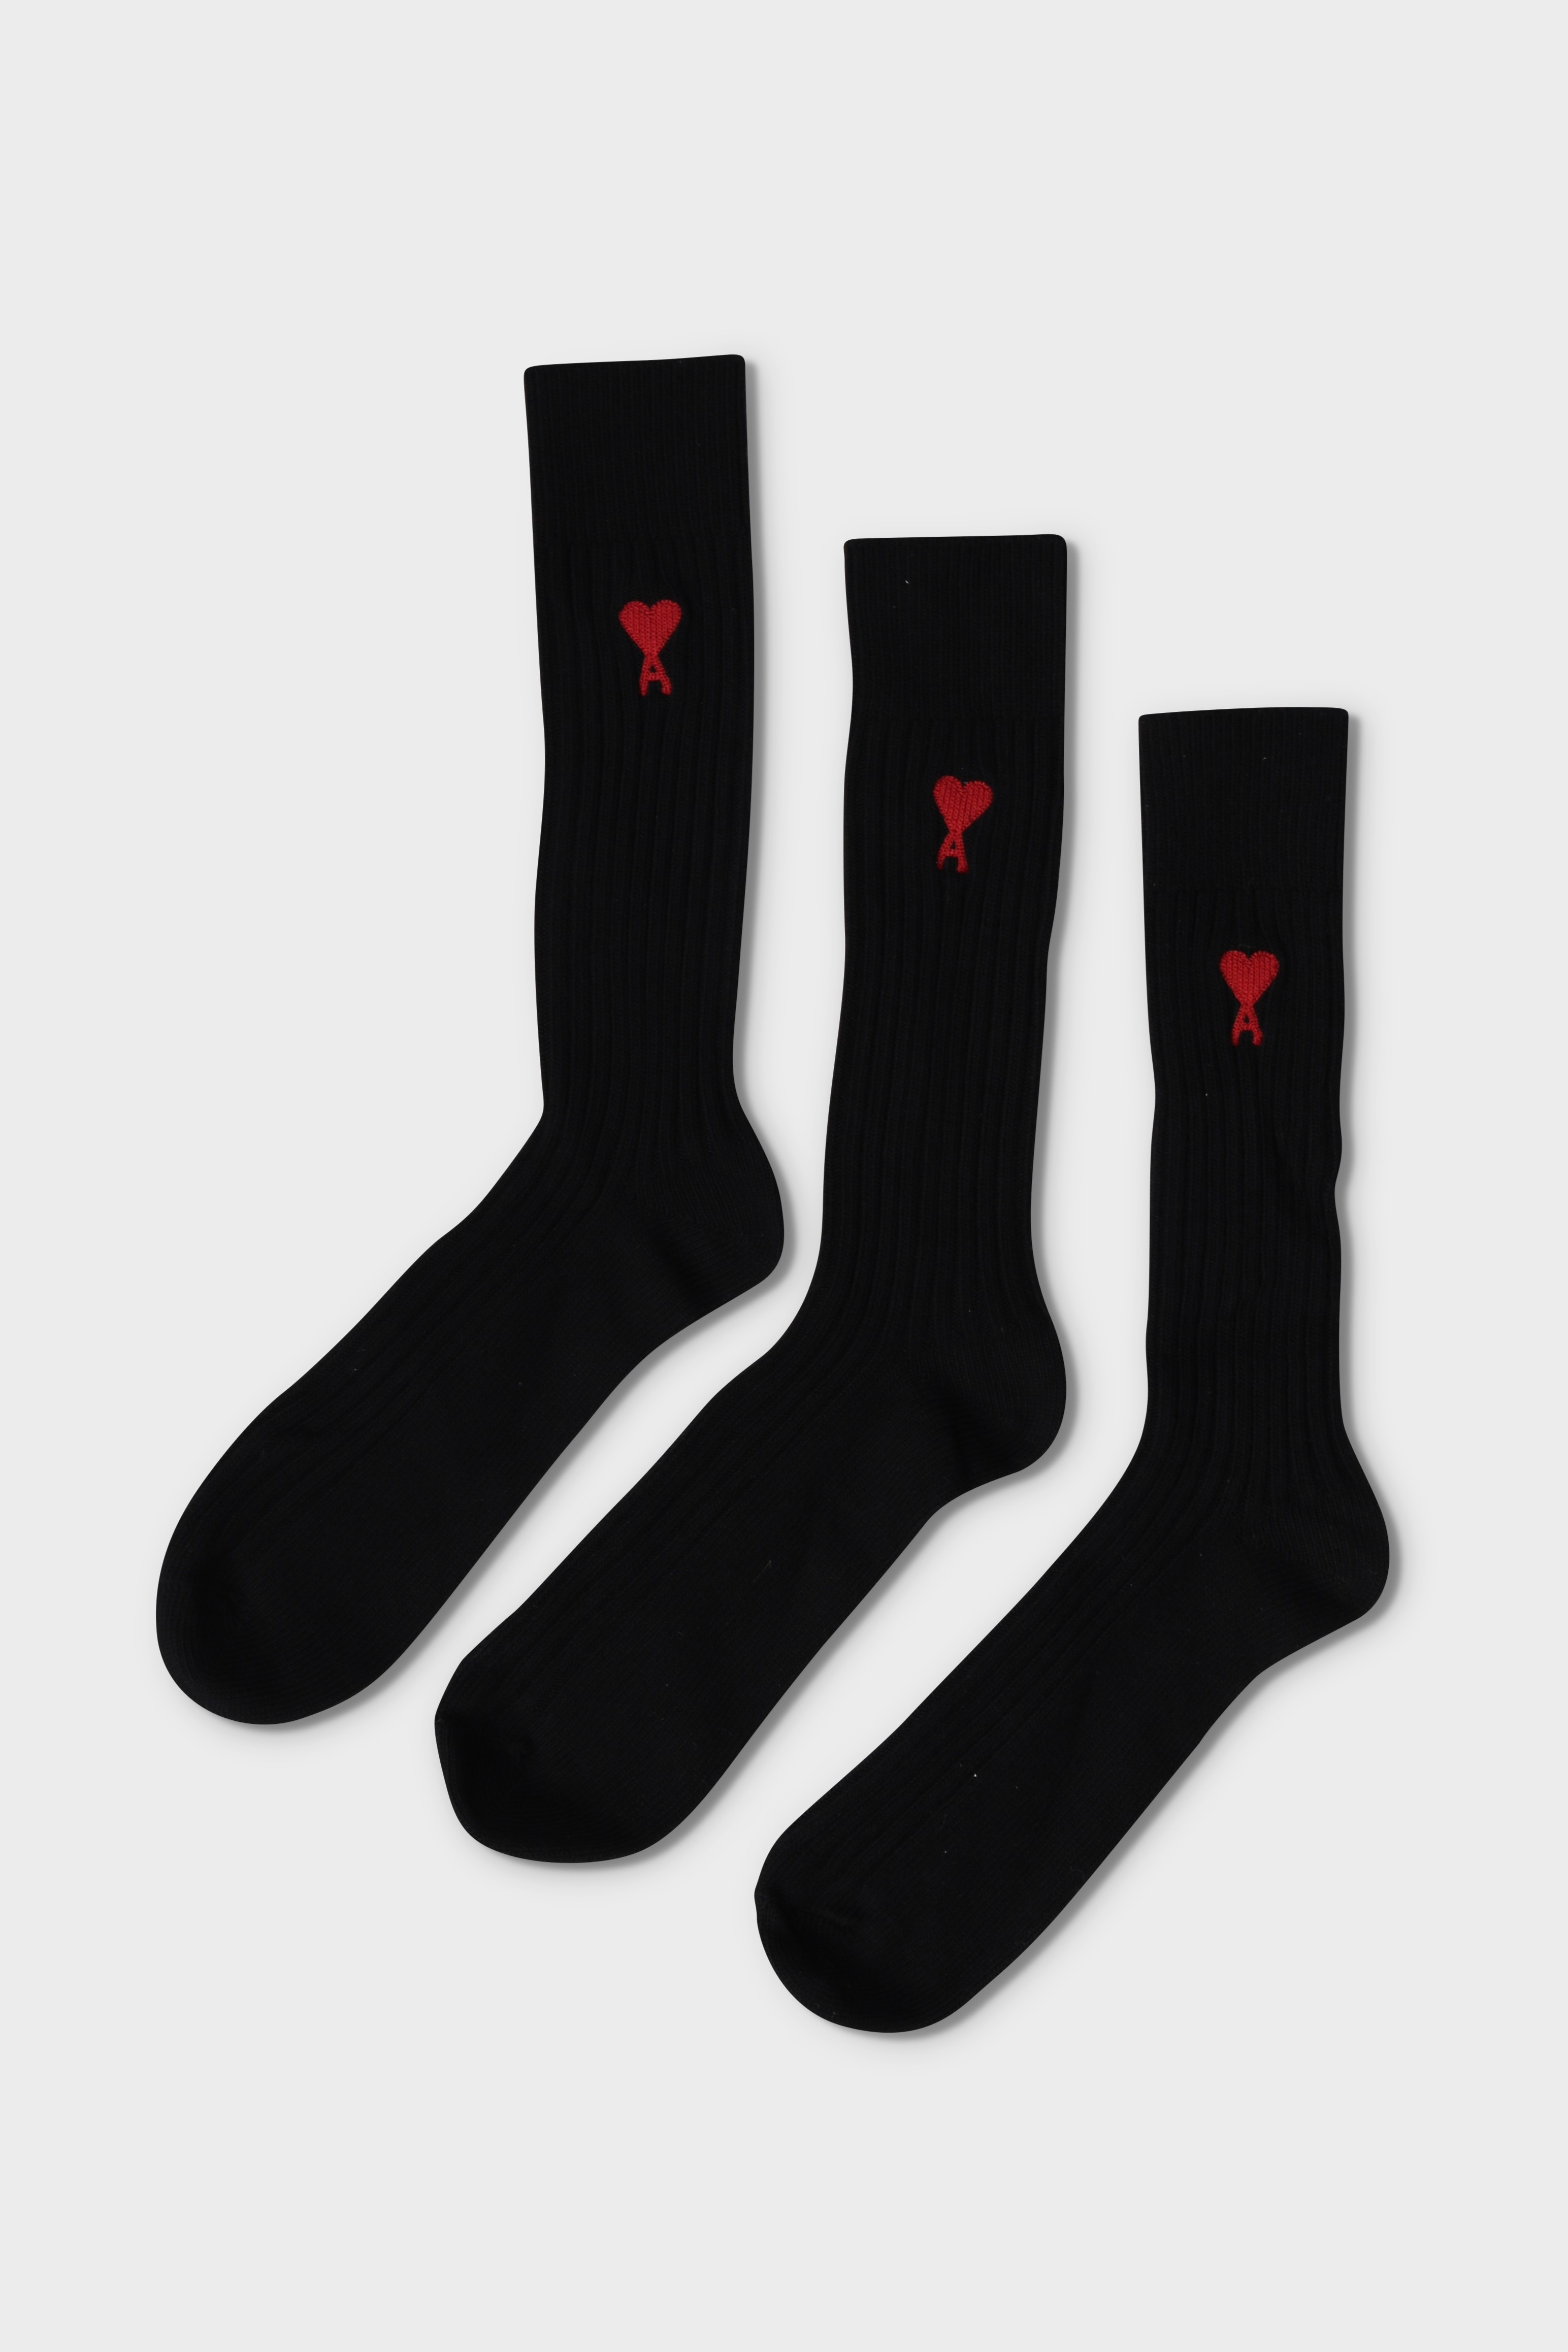 AMI PARIS de Coeur 3 Pack Socks in Black 39-42